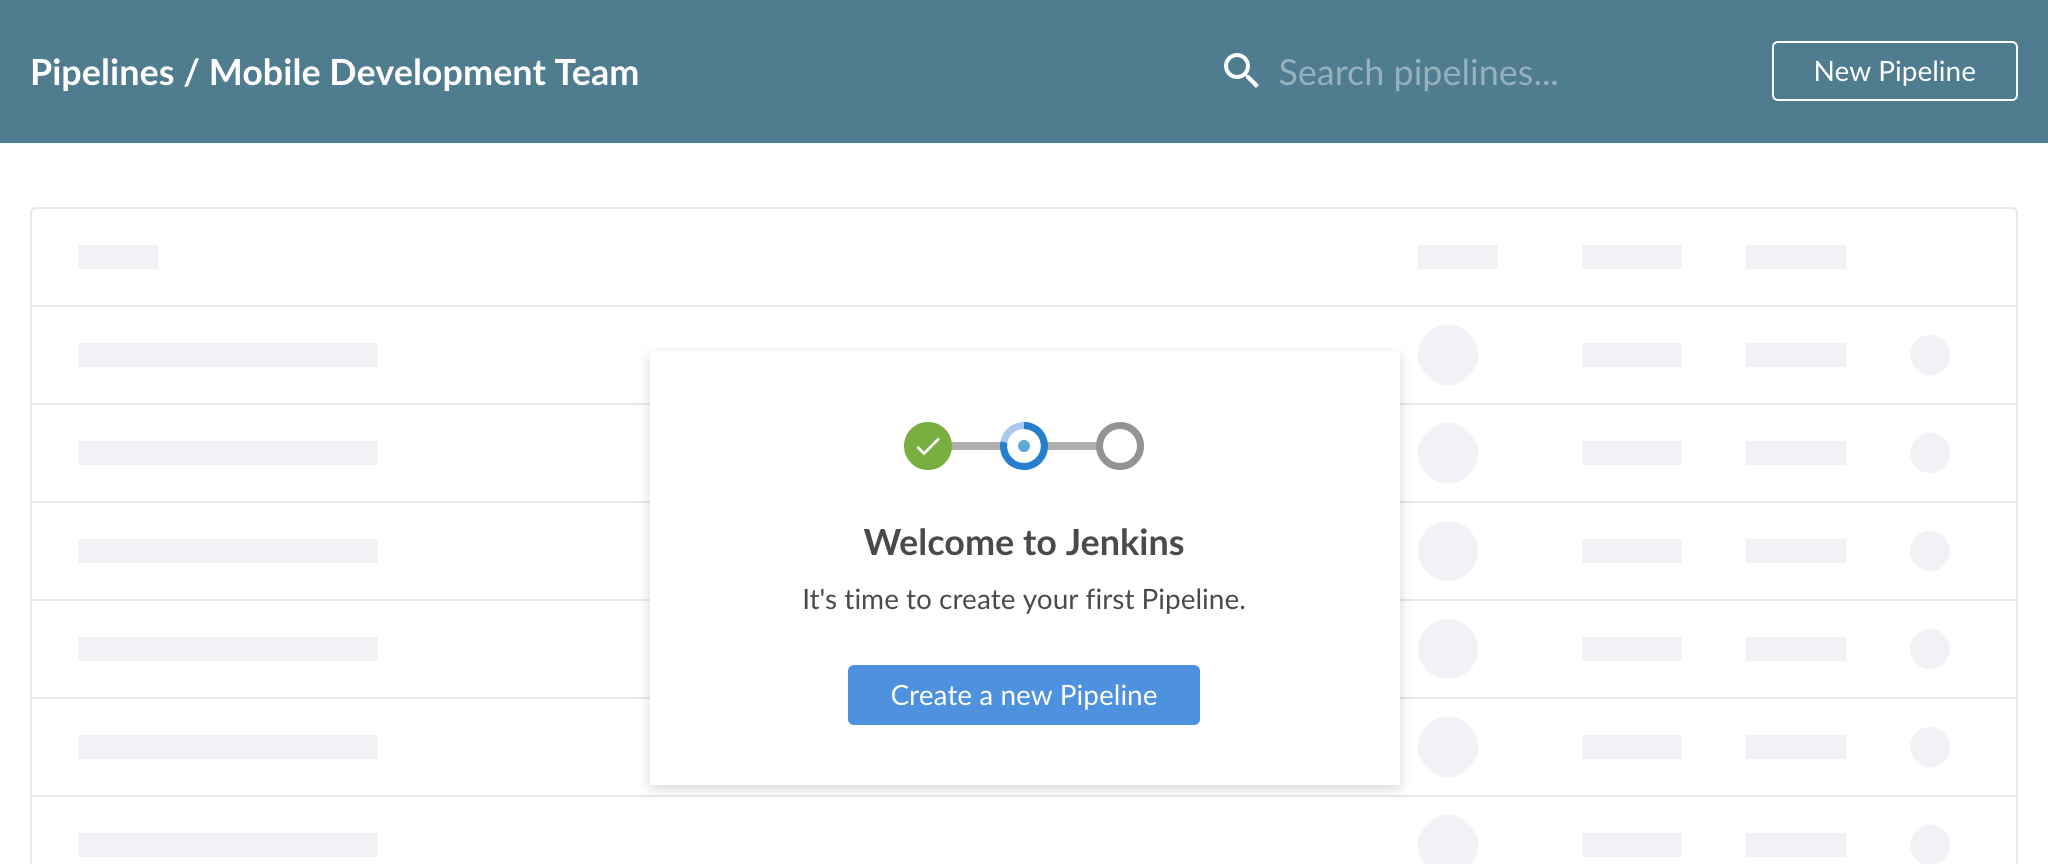 Create team - welcome to Jenkins